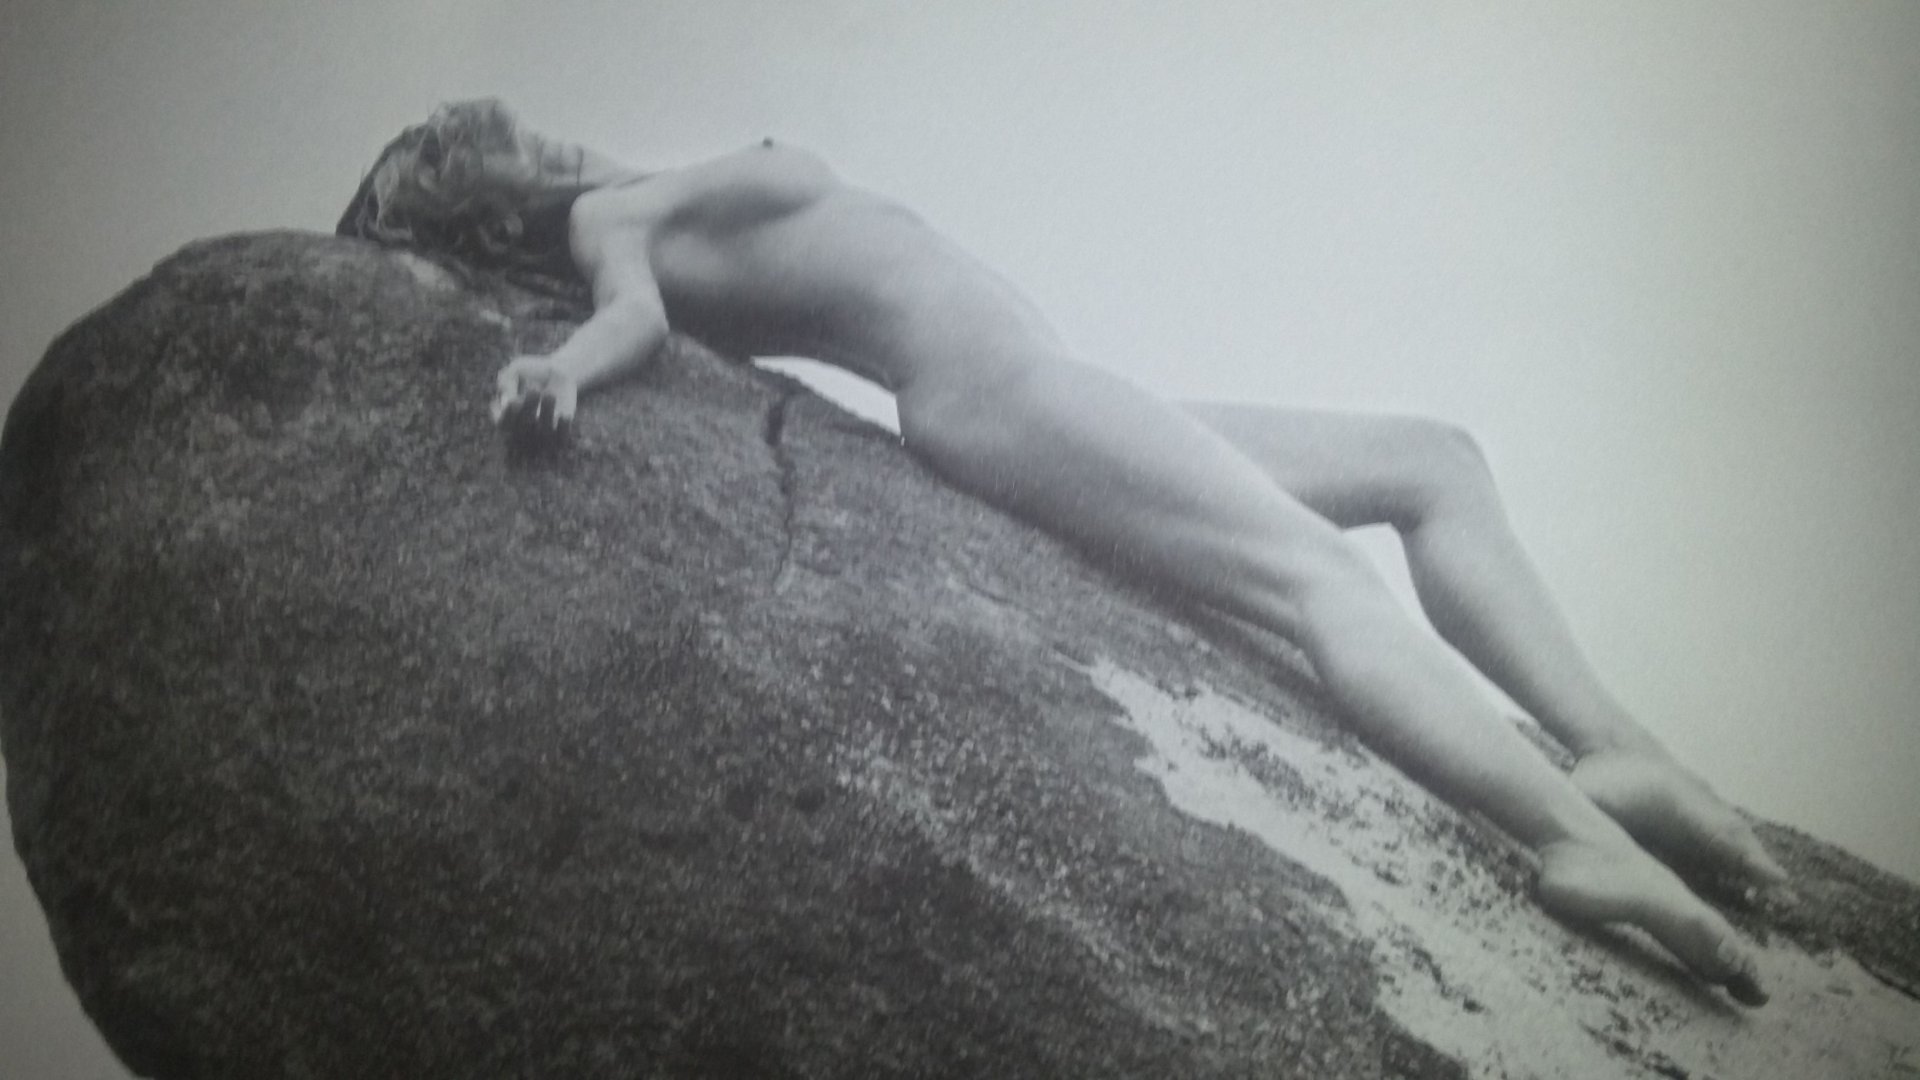 Heidi Klum Nude (36 Photos)